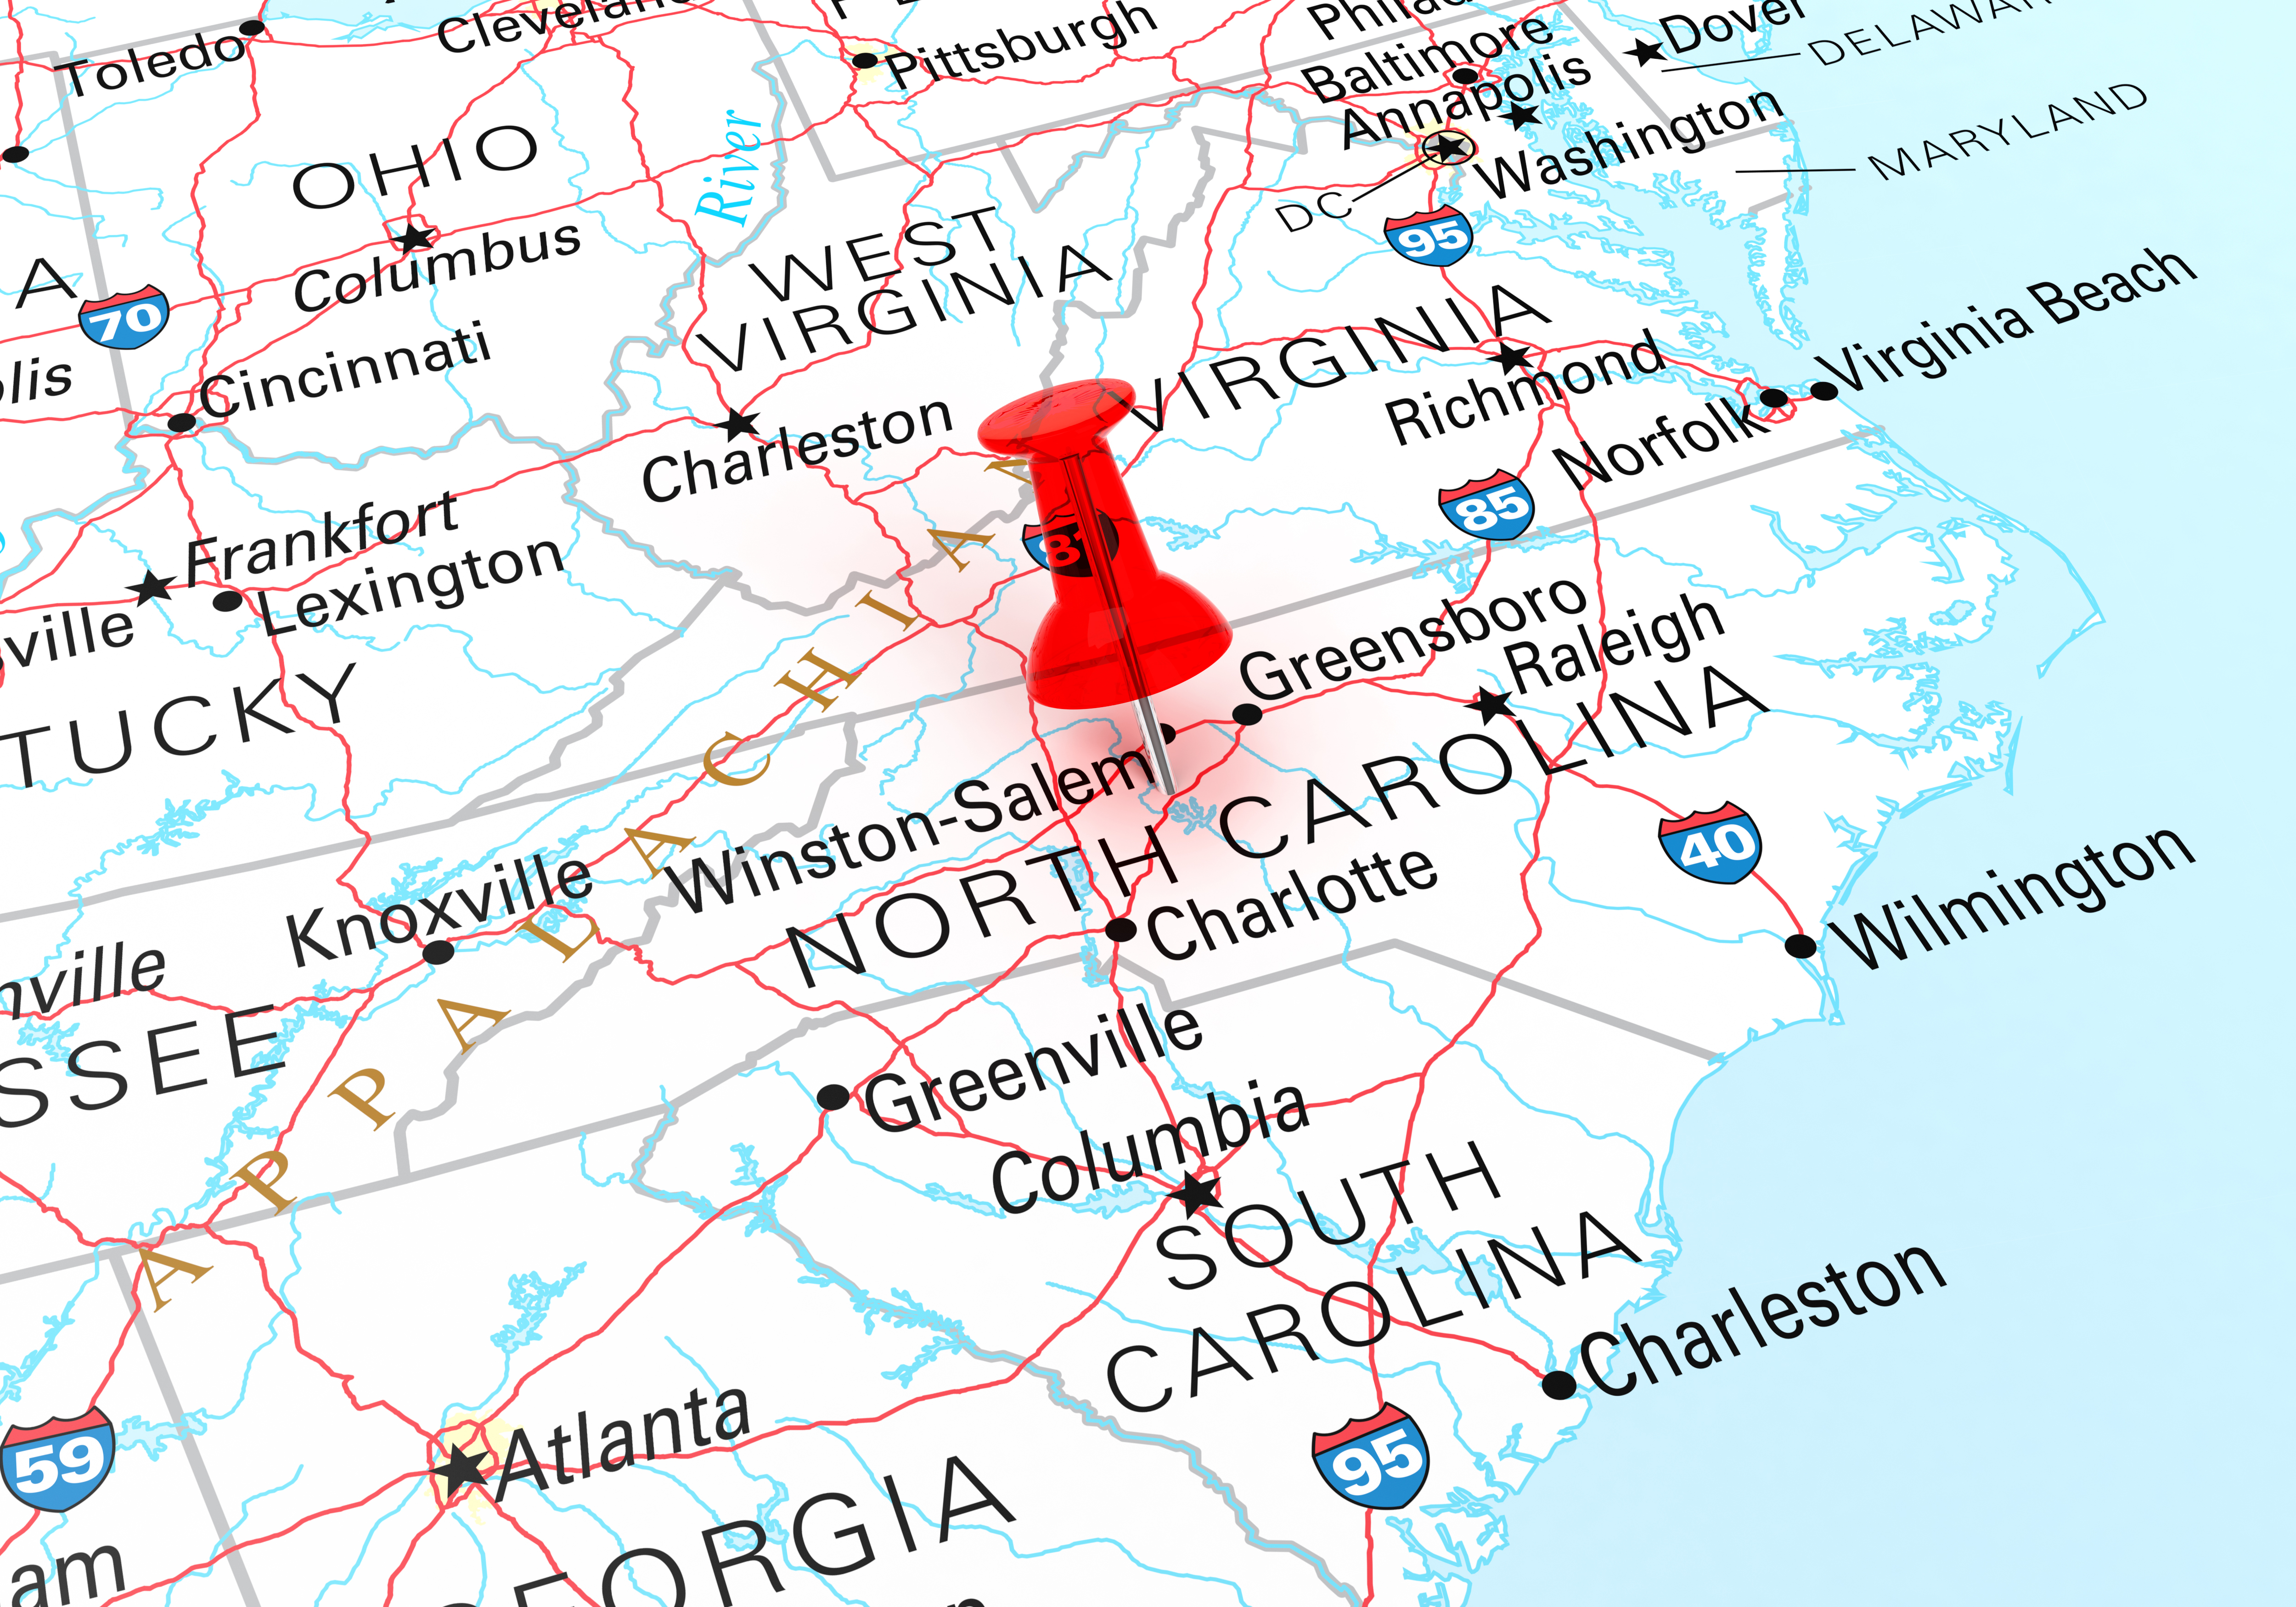 Pushpin showing North Carolina on a map